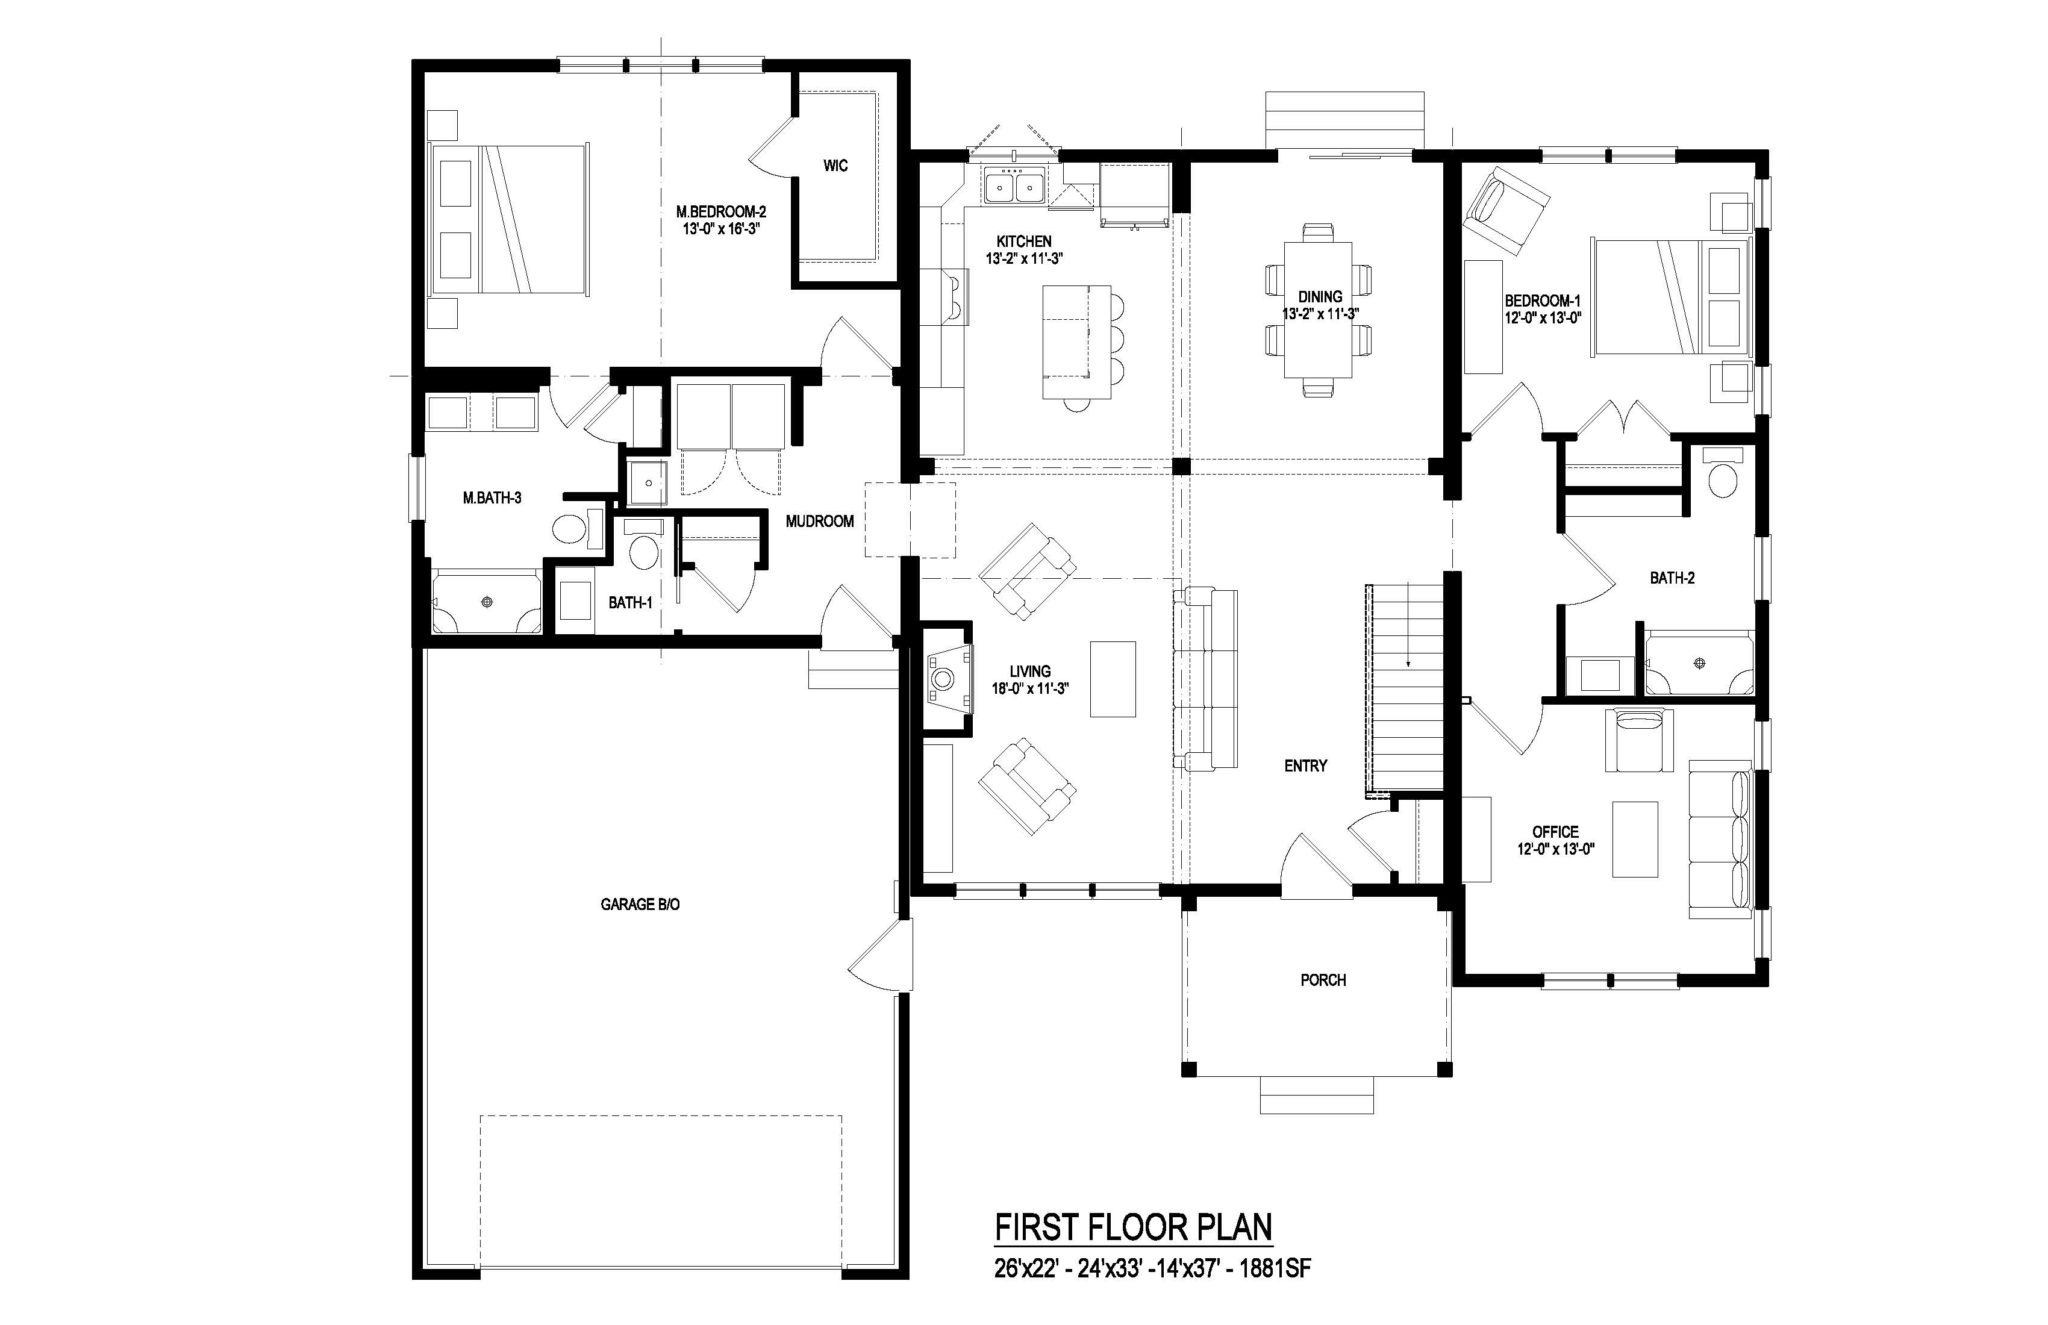 Partridge Family House Floor Plan floorplans.click